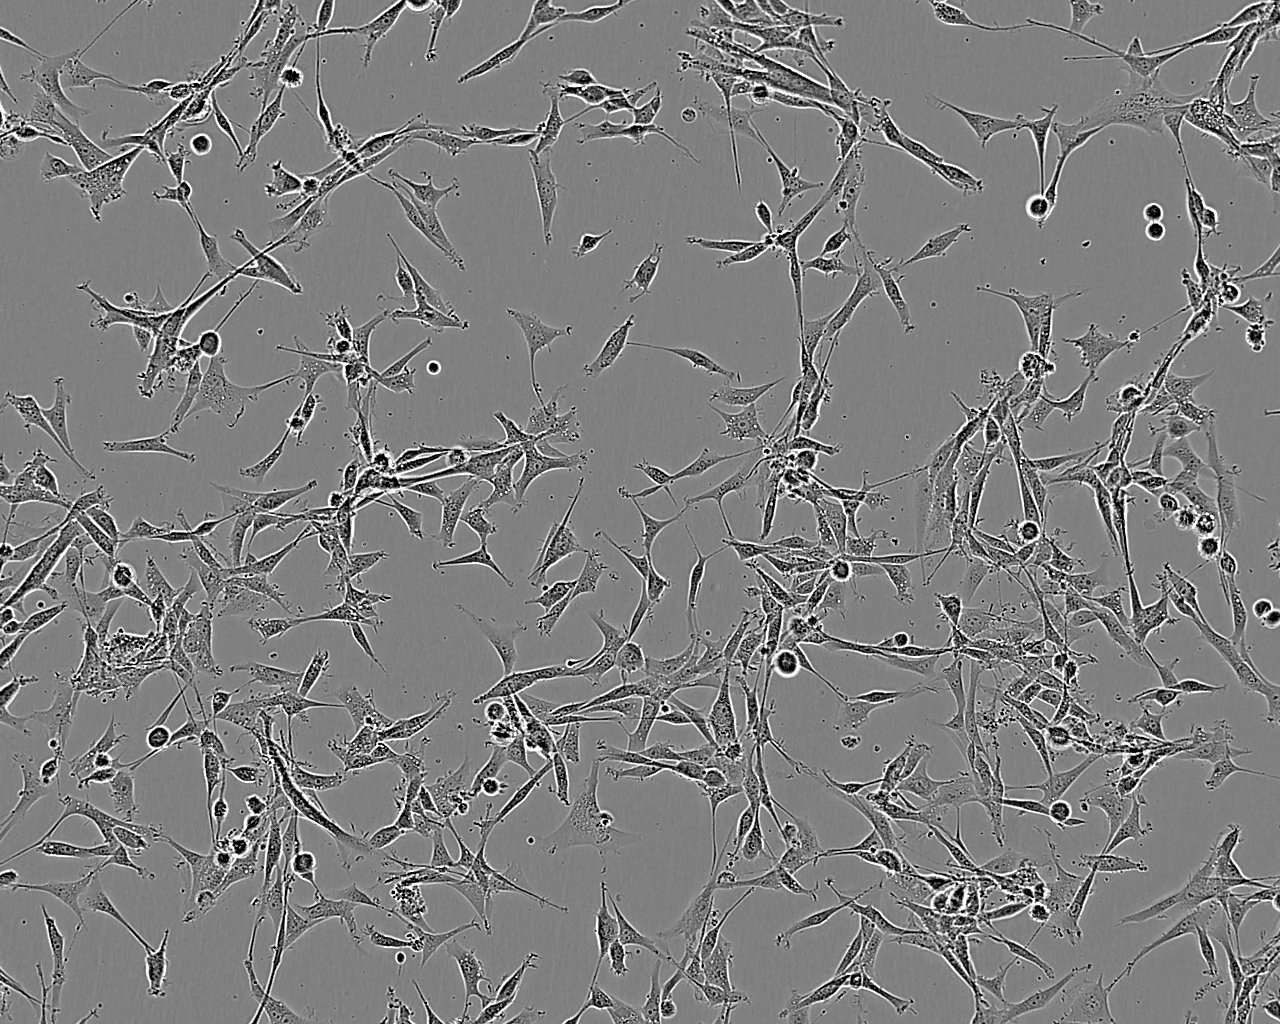 293GP epithelioid cells人胚肾细胞系